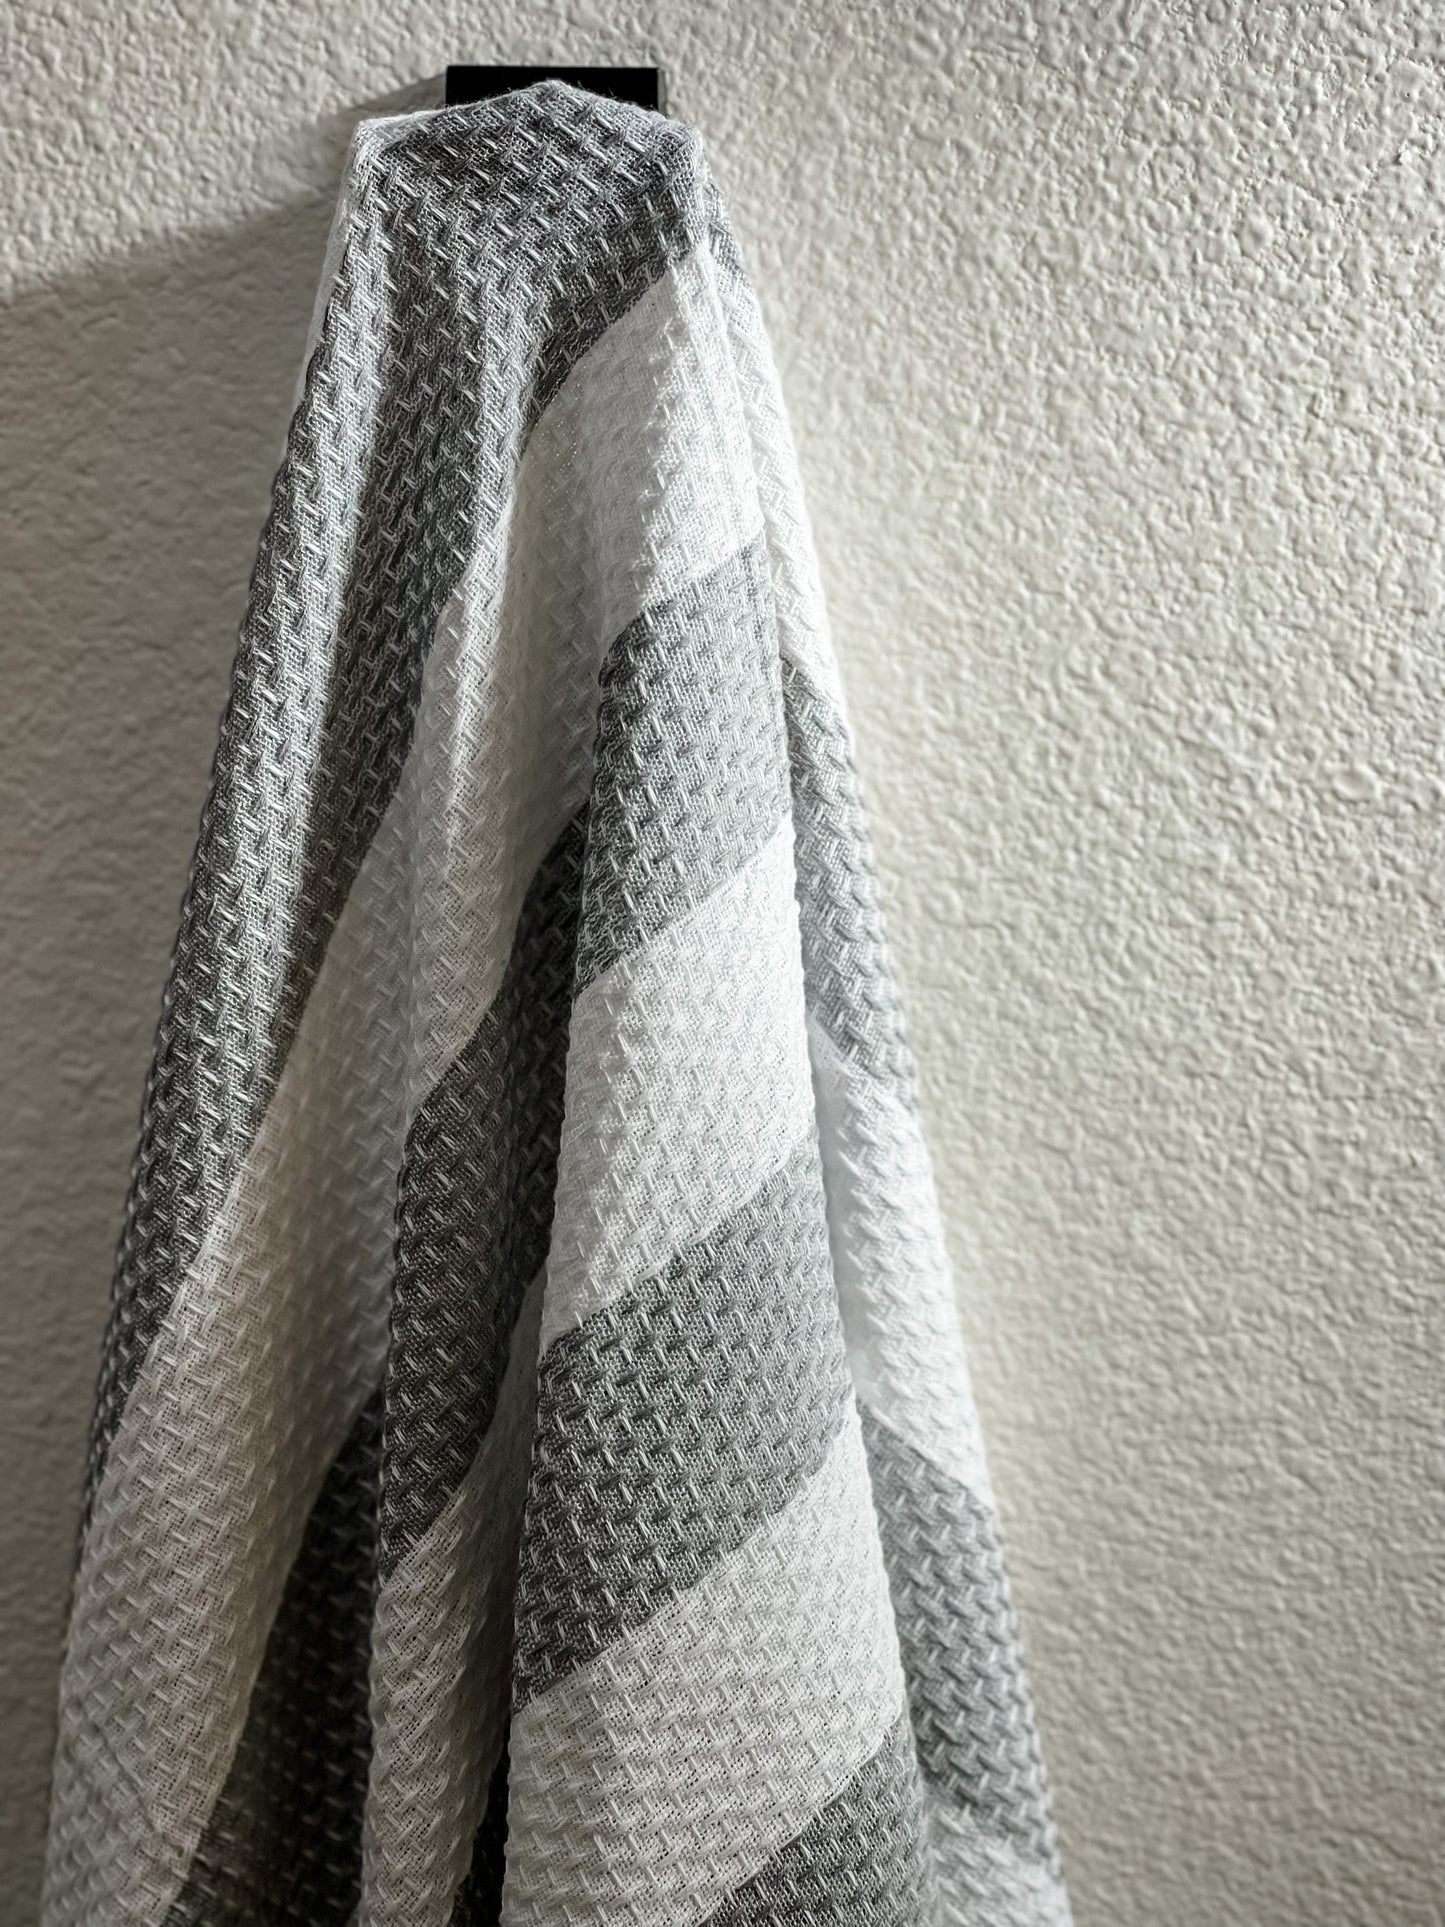 Grey & White Bath Towel